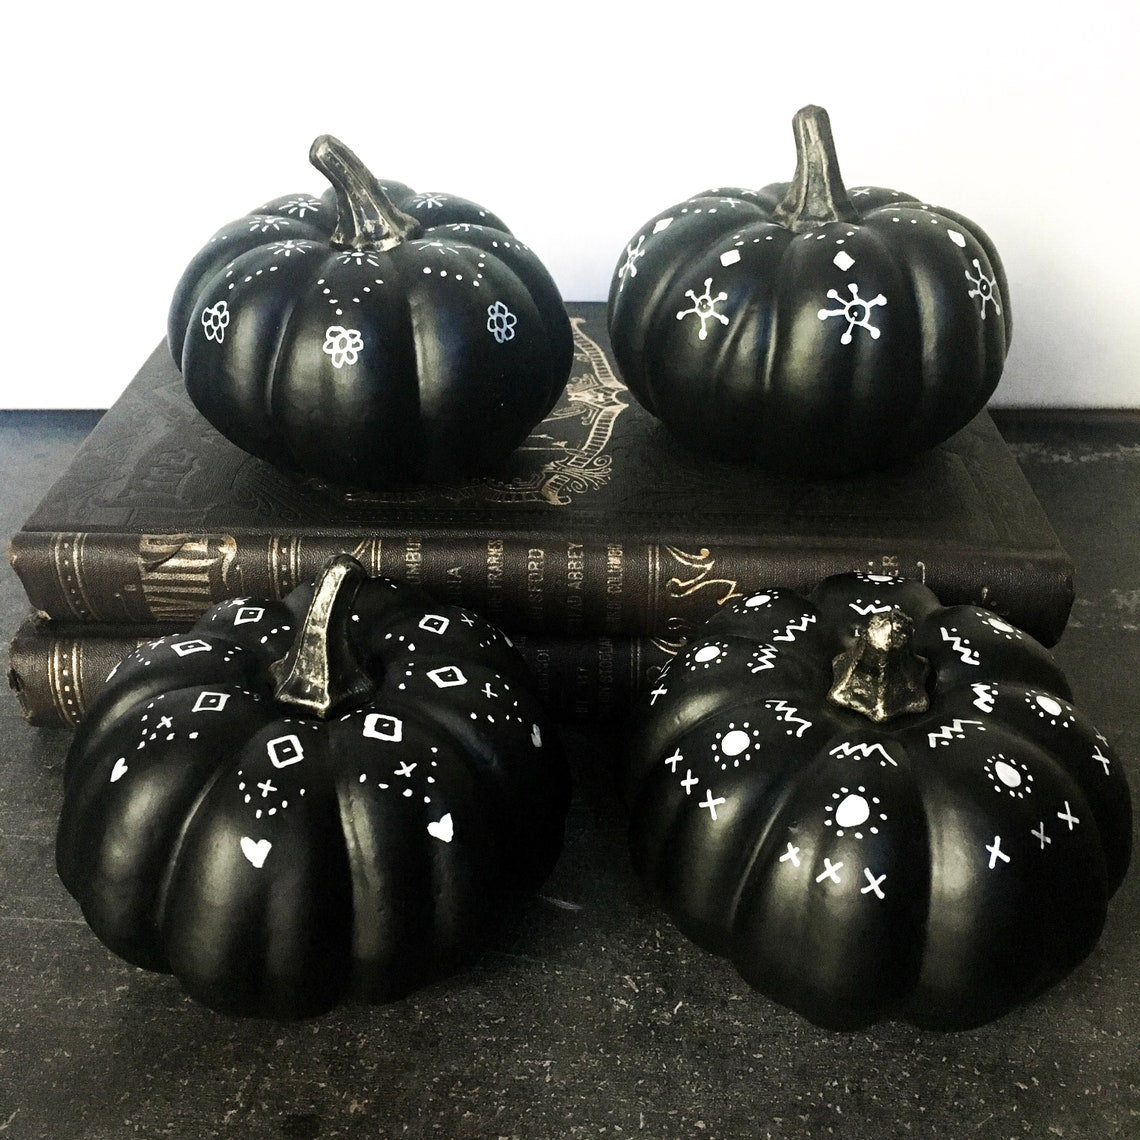 Painted Pumpkins, Set of four black and white mini pumpkins